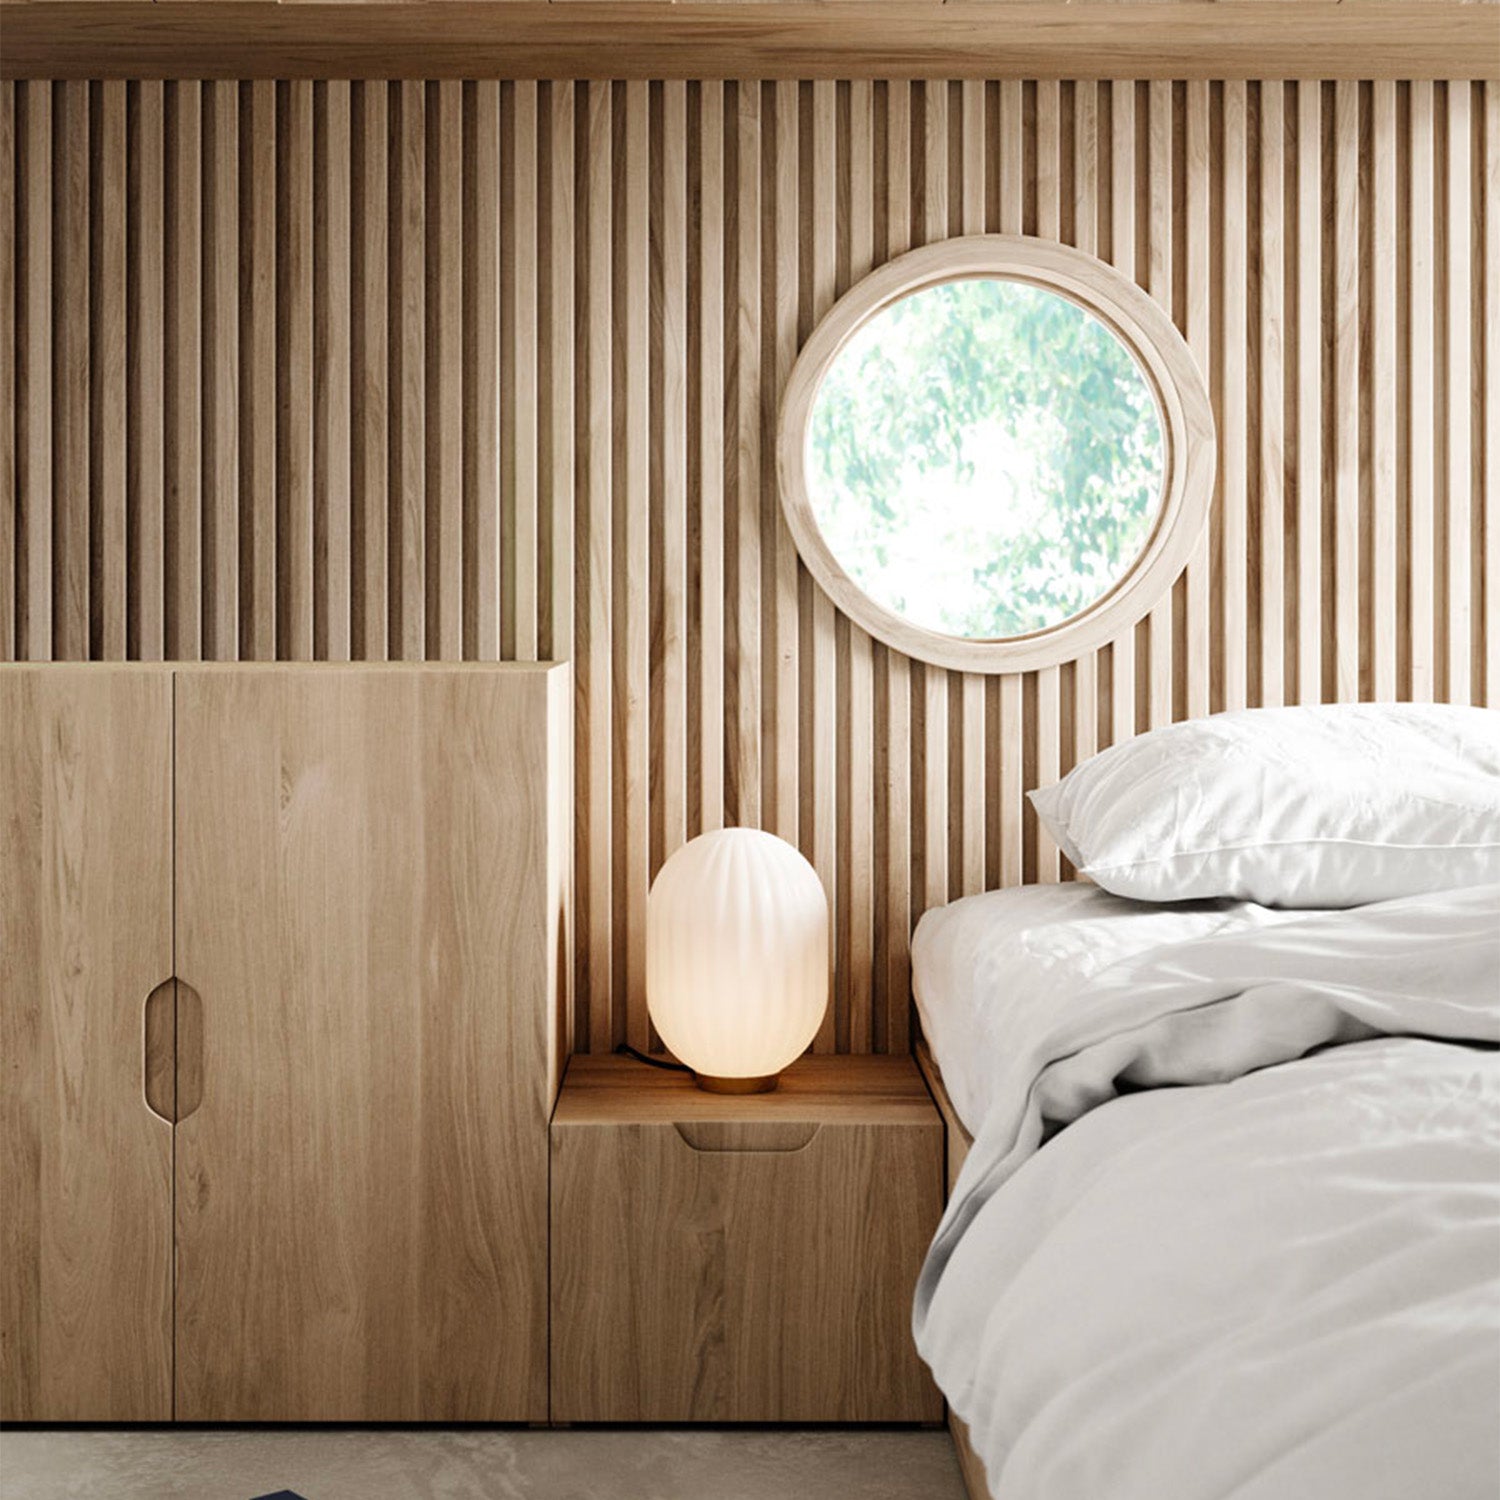 MODECO - Glass bedside lamp, elegant and cocooning bedroom